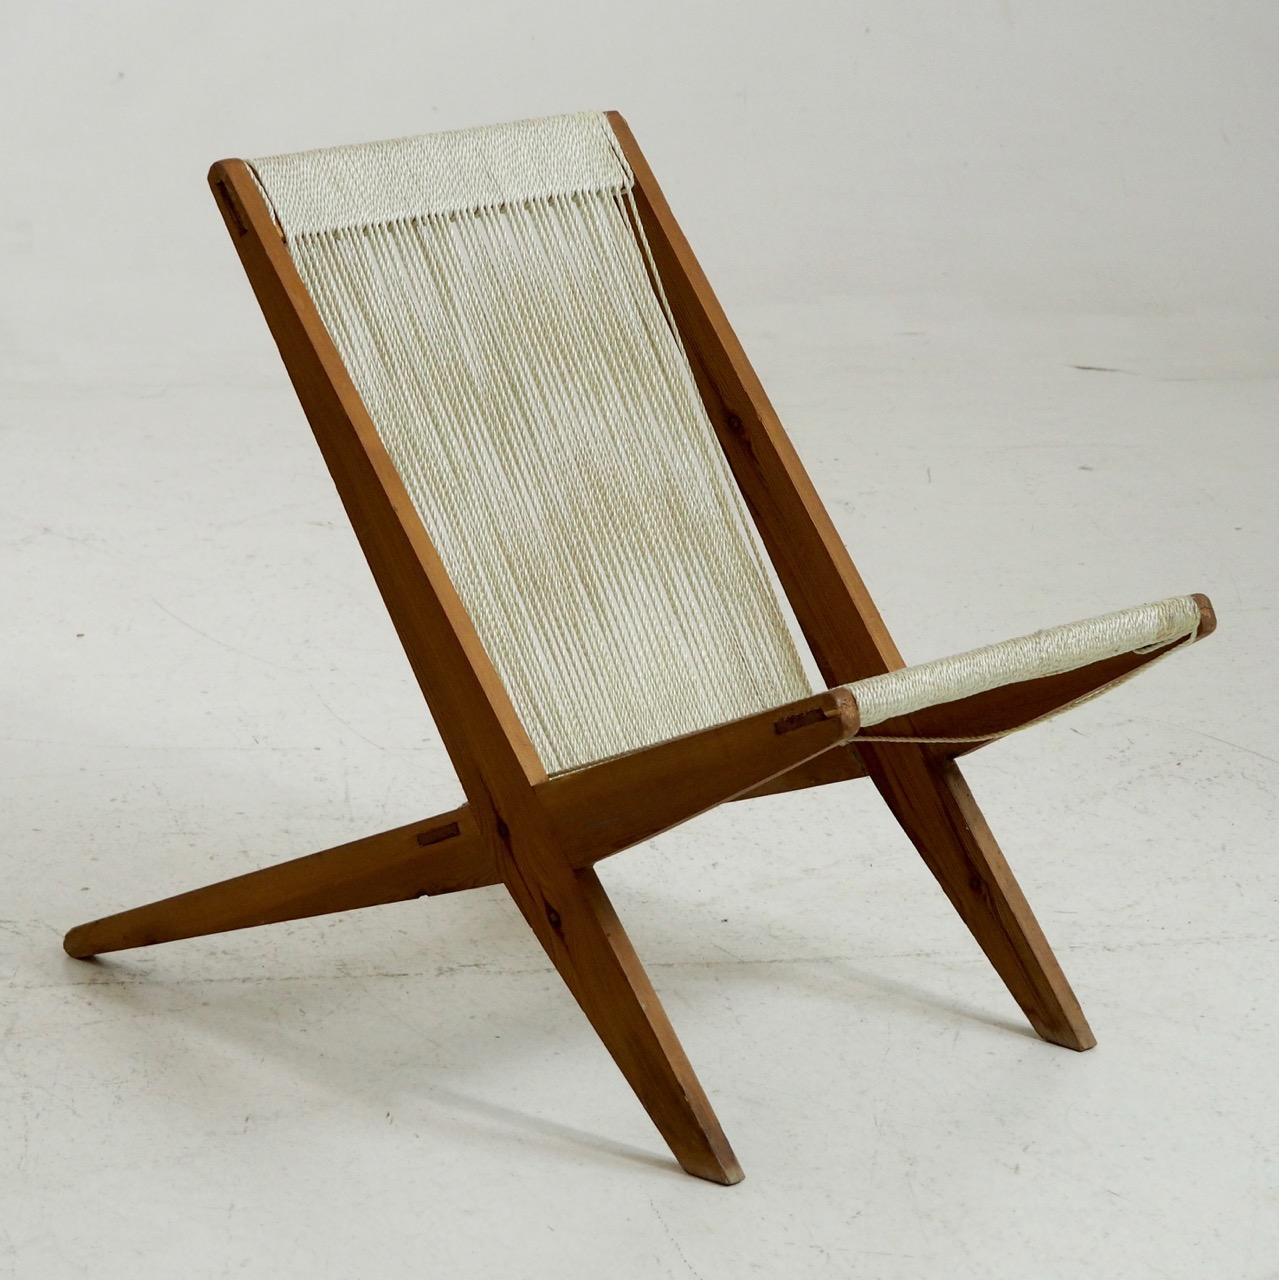 Rare Danish design chair in Poul Kjærholm style, 1960s
Dimensions: H 75, H-seat 44, W 50, D 90 cm.
H 29.5, H-seat 17.3, W 19.6, D 35.4 in.